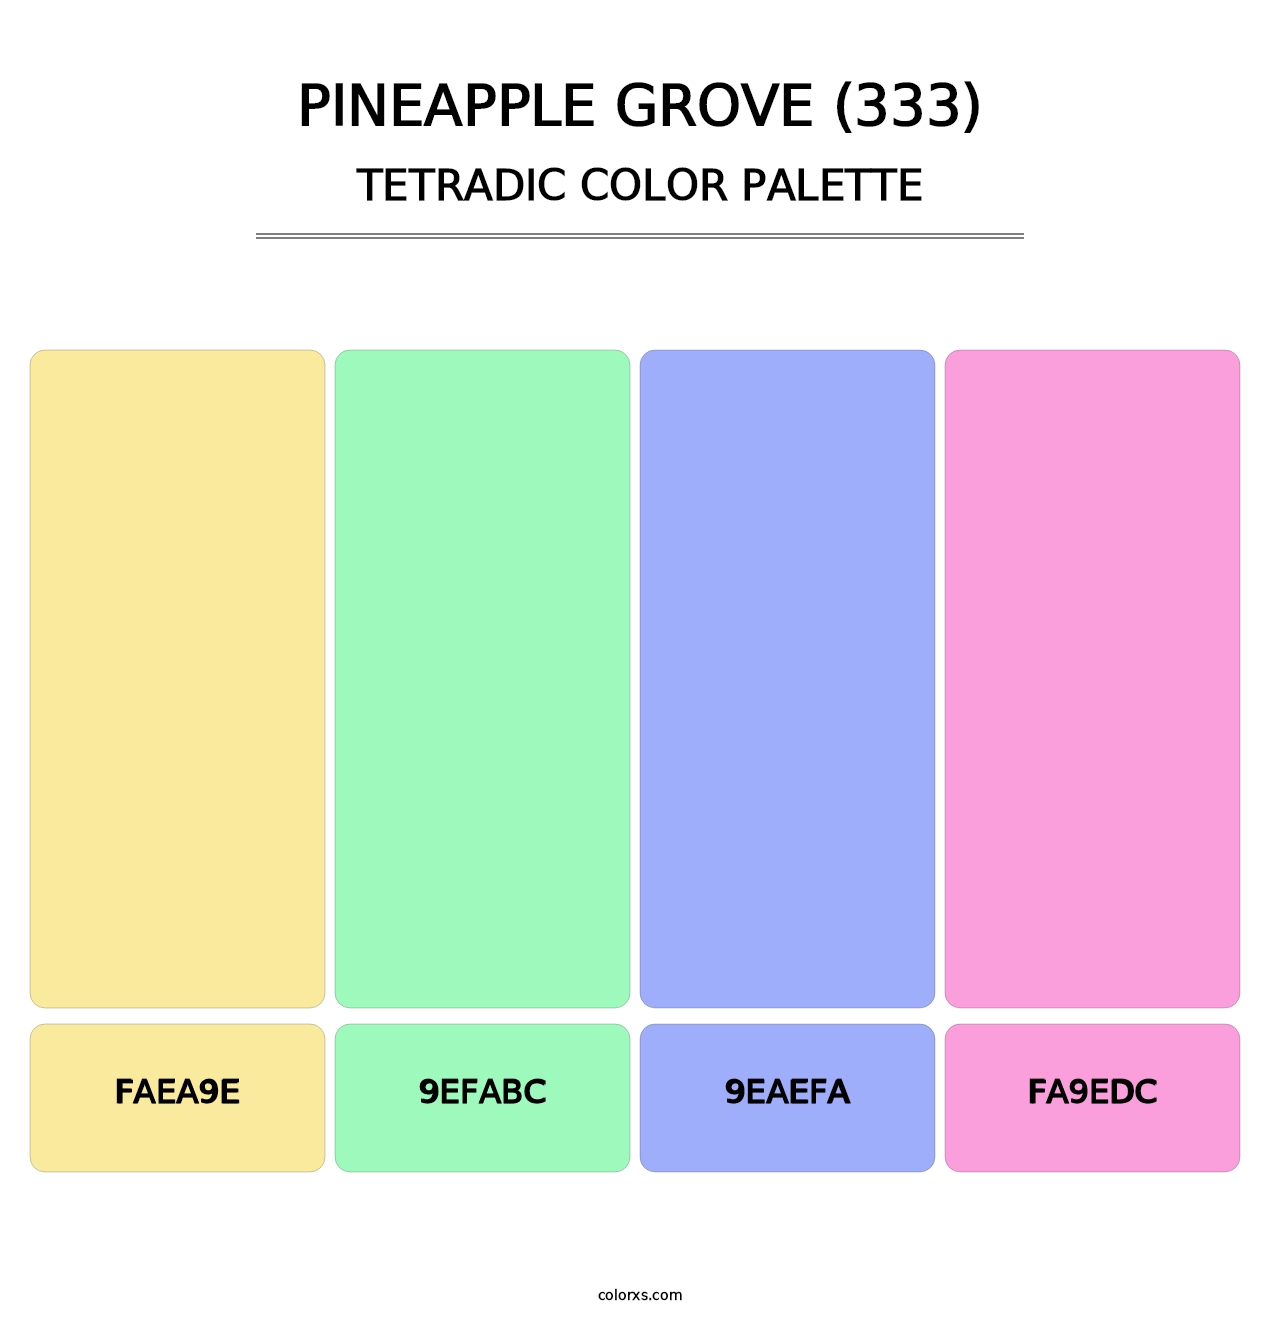 Pineapple Grove (333) - Tetradic Color Palette